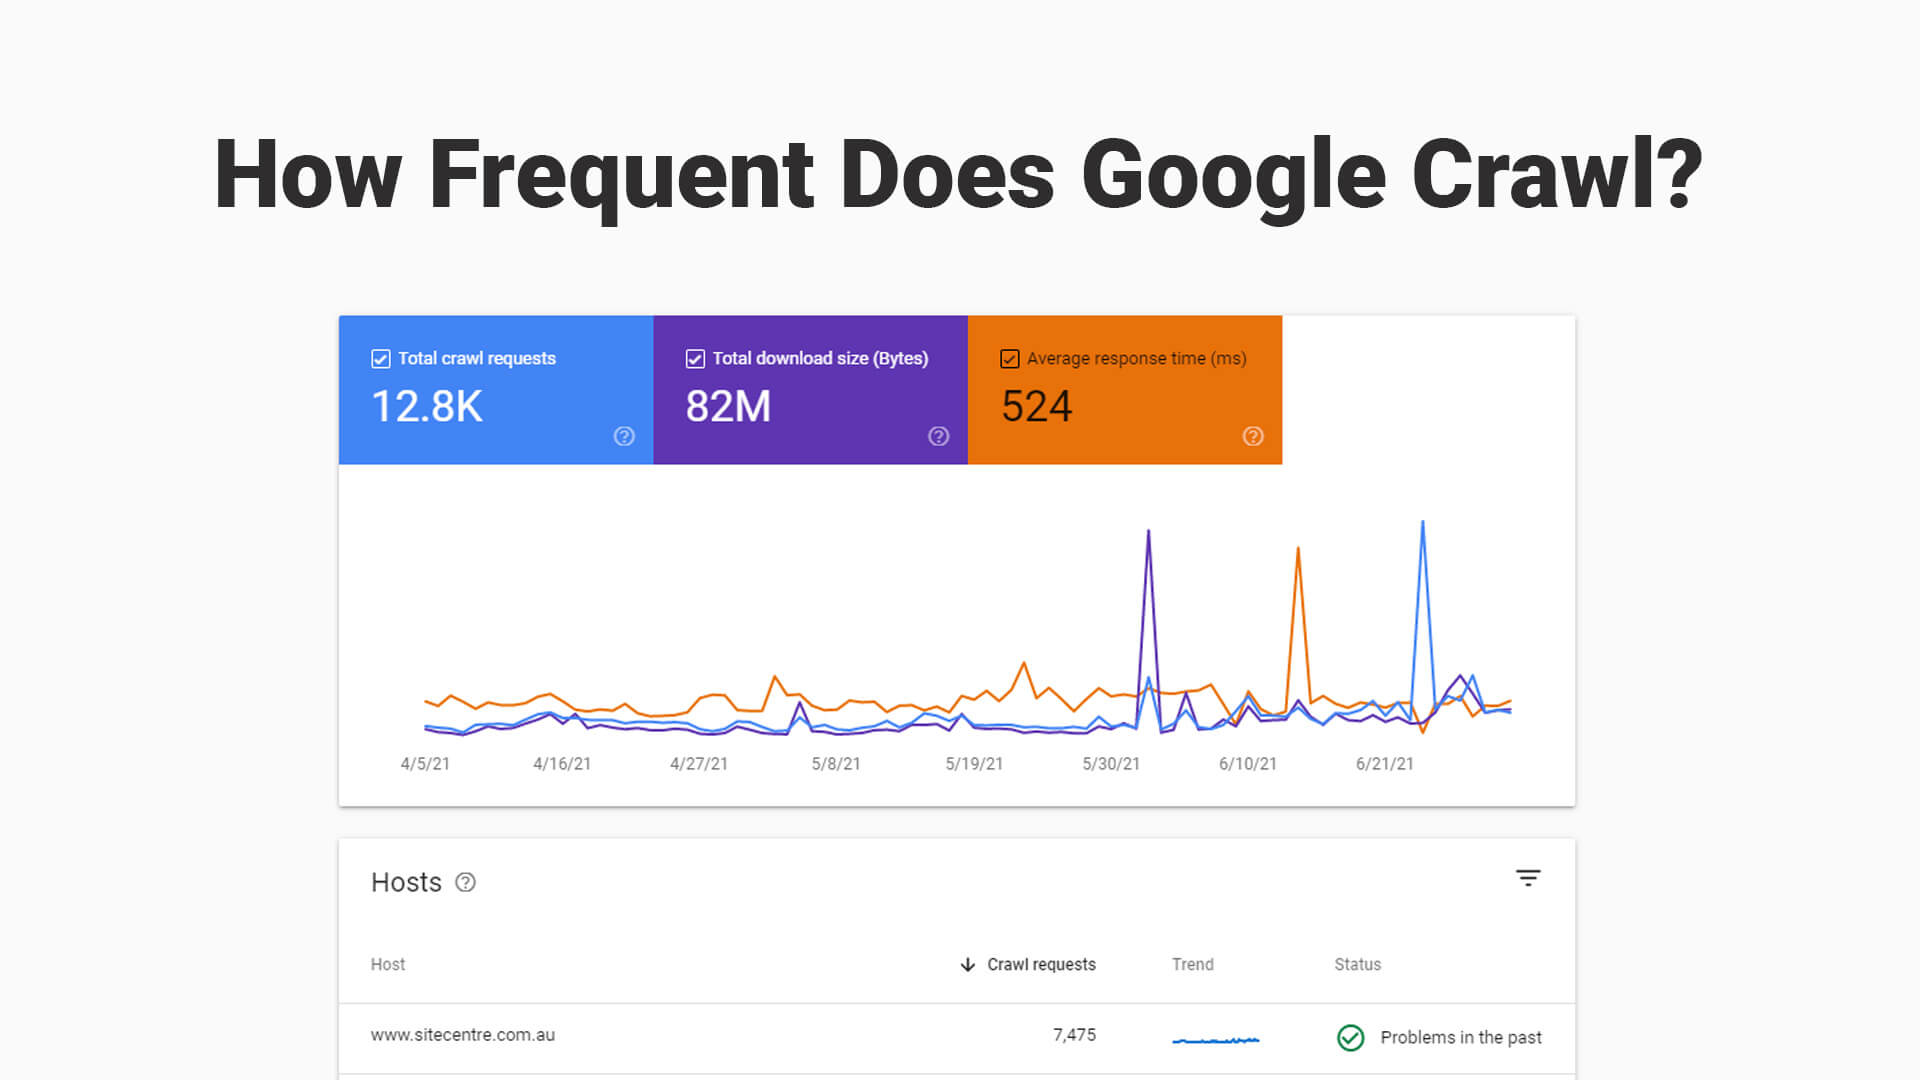 How often does Google crawl the web?